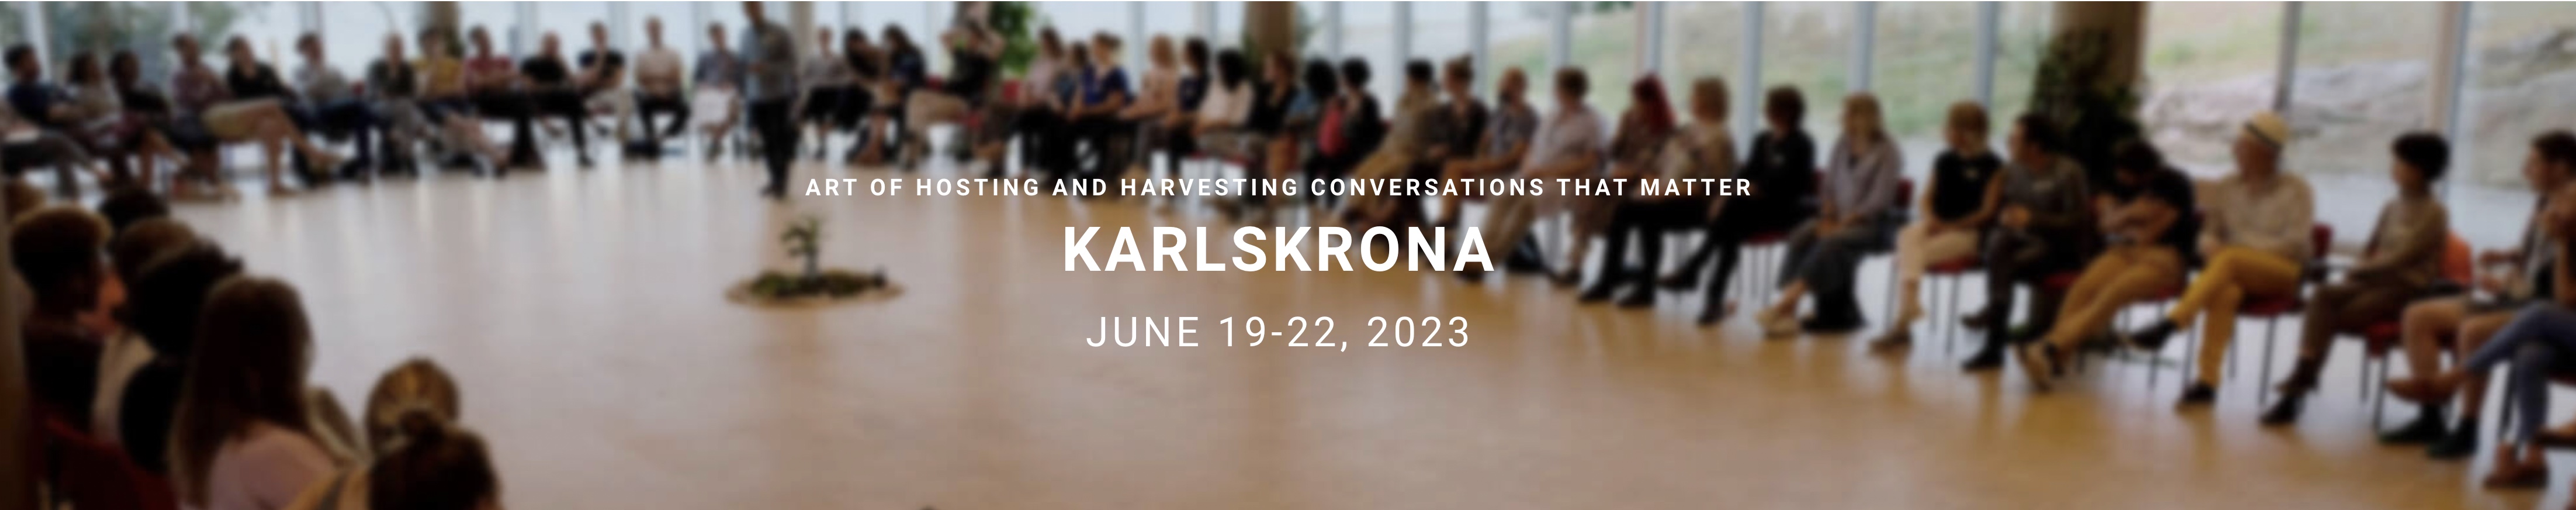 Art of Hosting Karslkrona